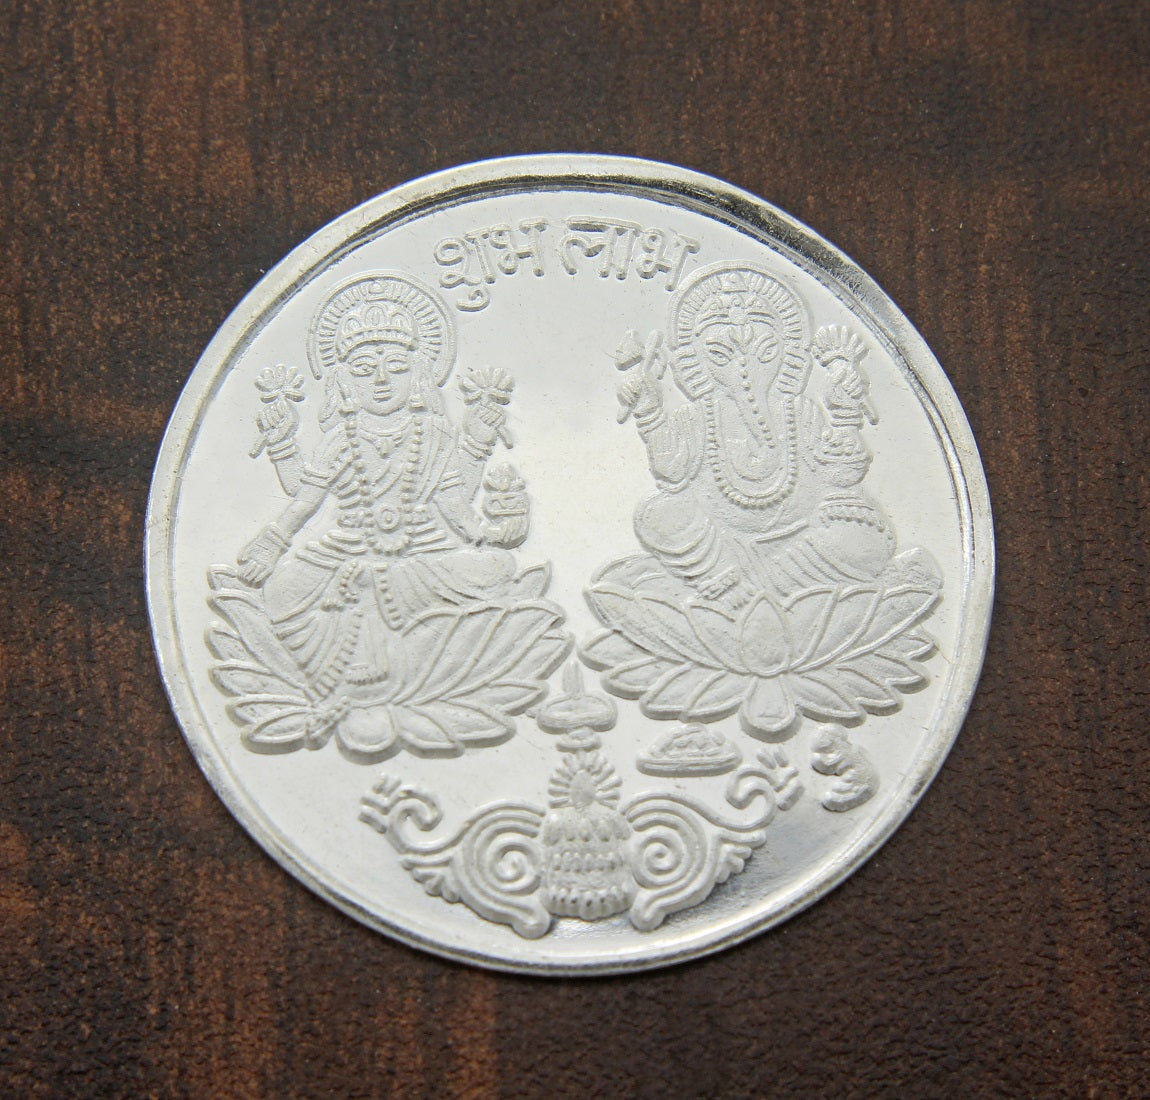 999 Silver Laxmi Ganesha XL Coin For Diwali And Dhanteras